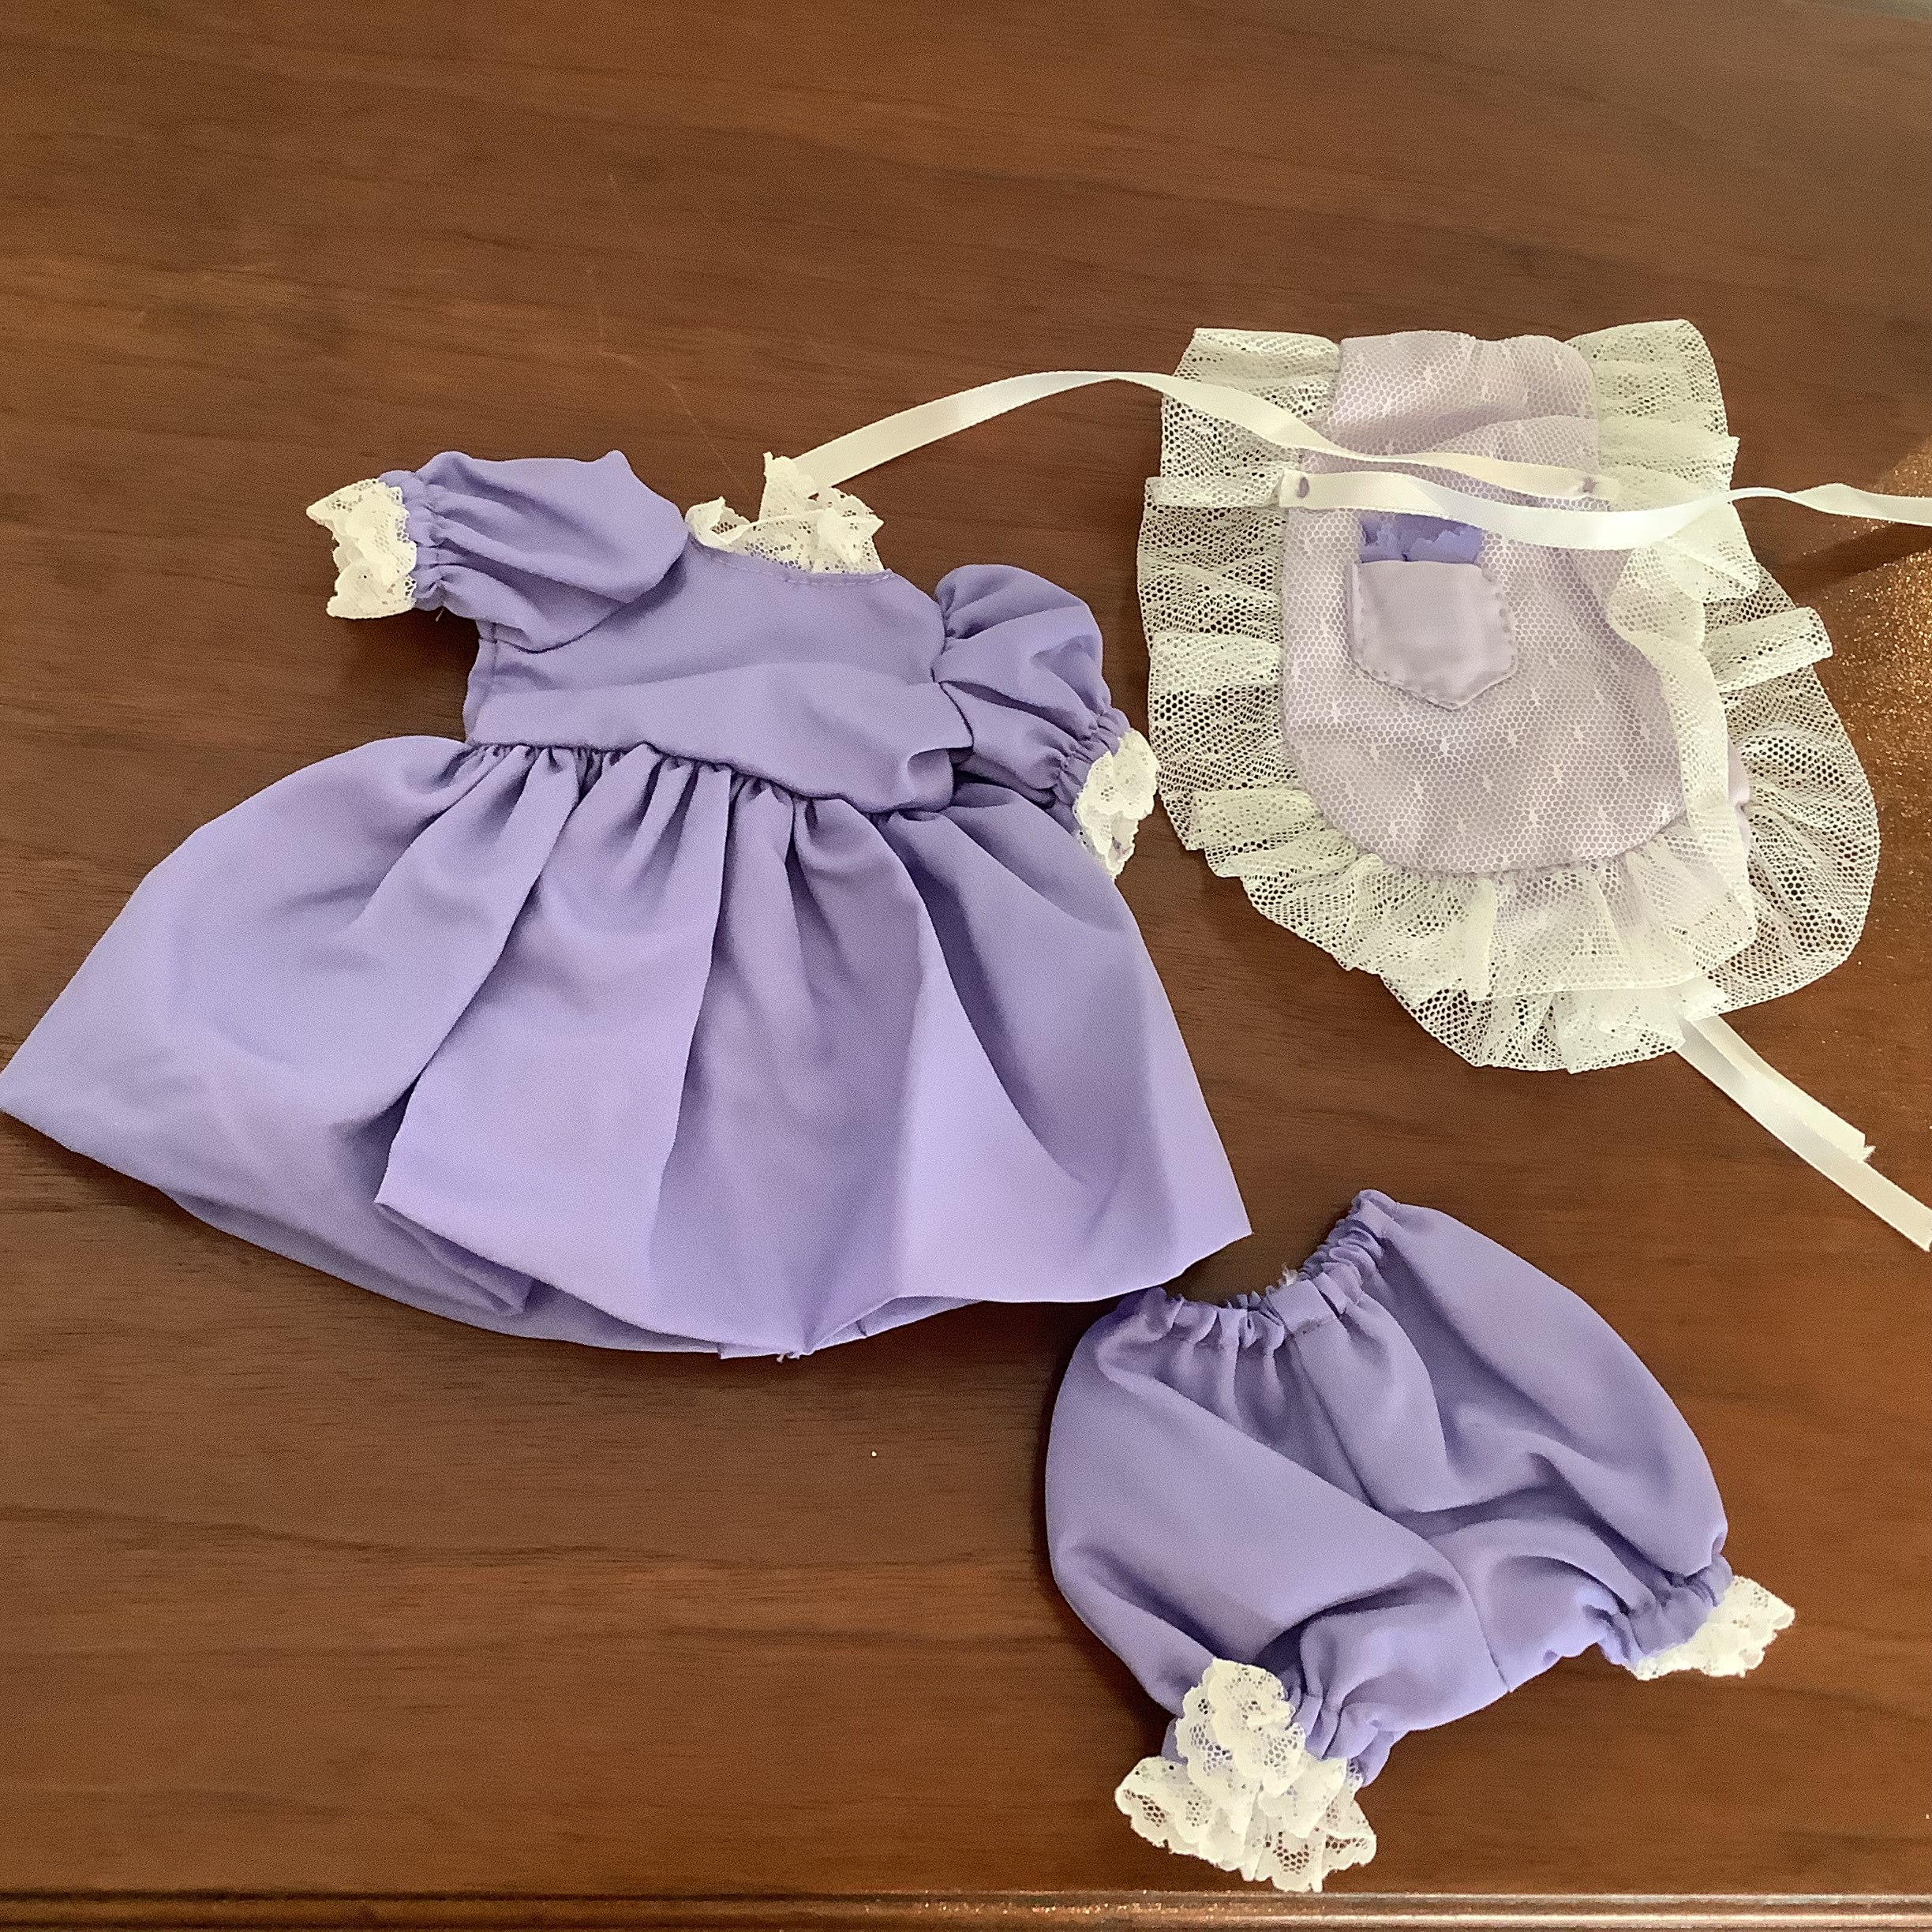 Purple dress, purple bloomers and white apron lying apart